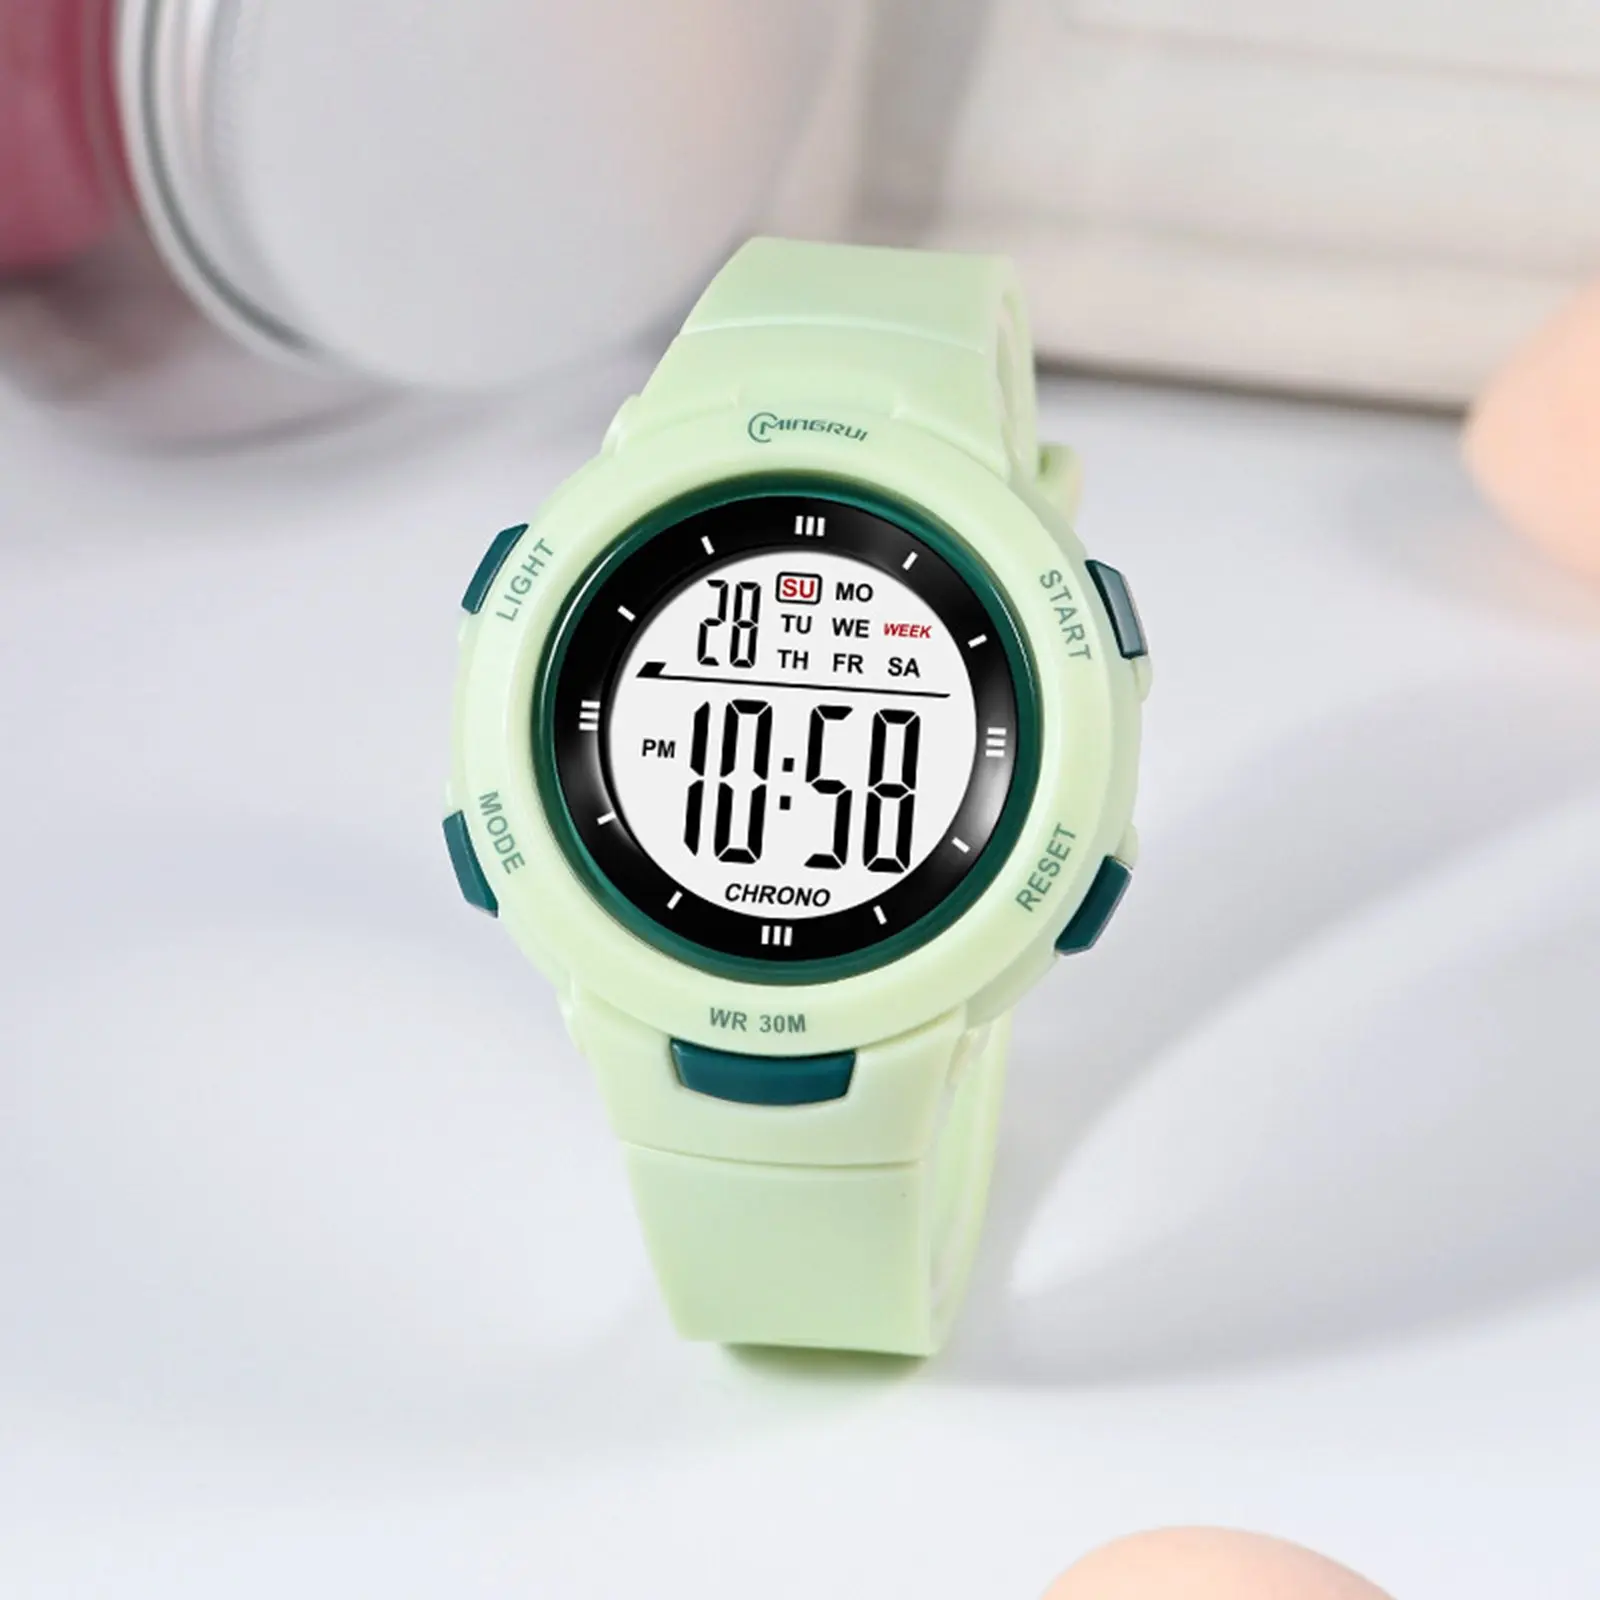 Boys Girls Sport Digital Watch Outdoor Waterproof Electronic Watches, Wrist Watch with Alarm Stopwatch